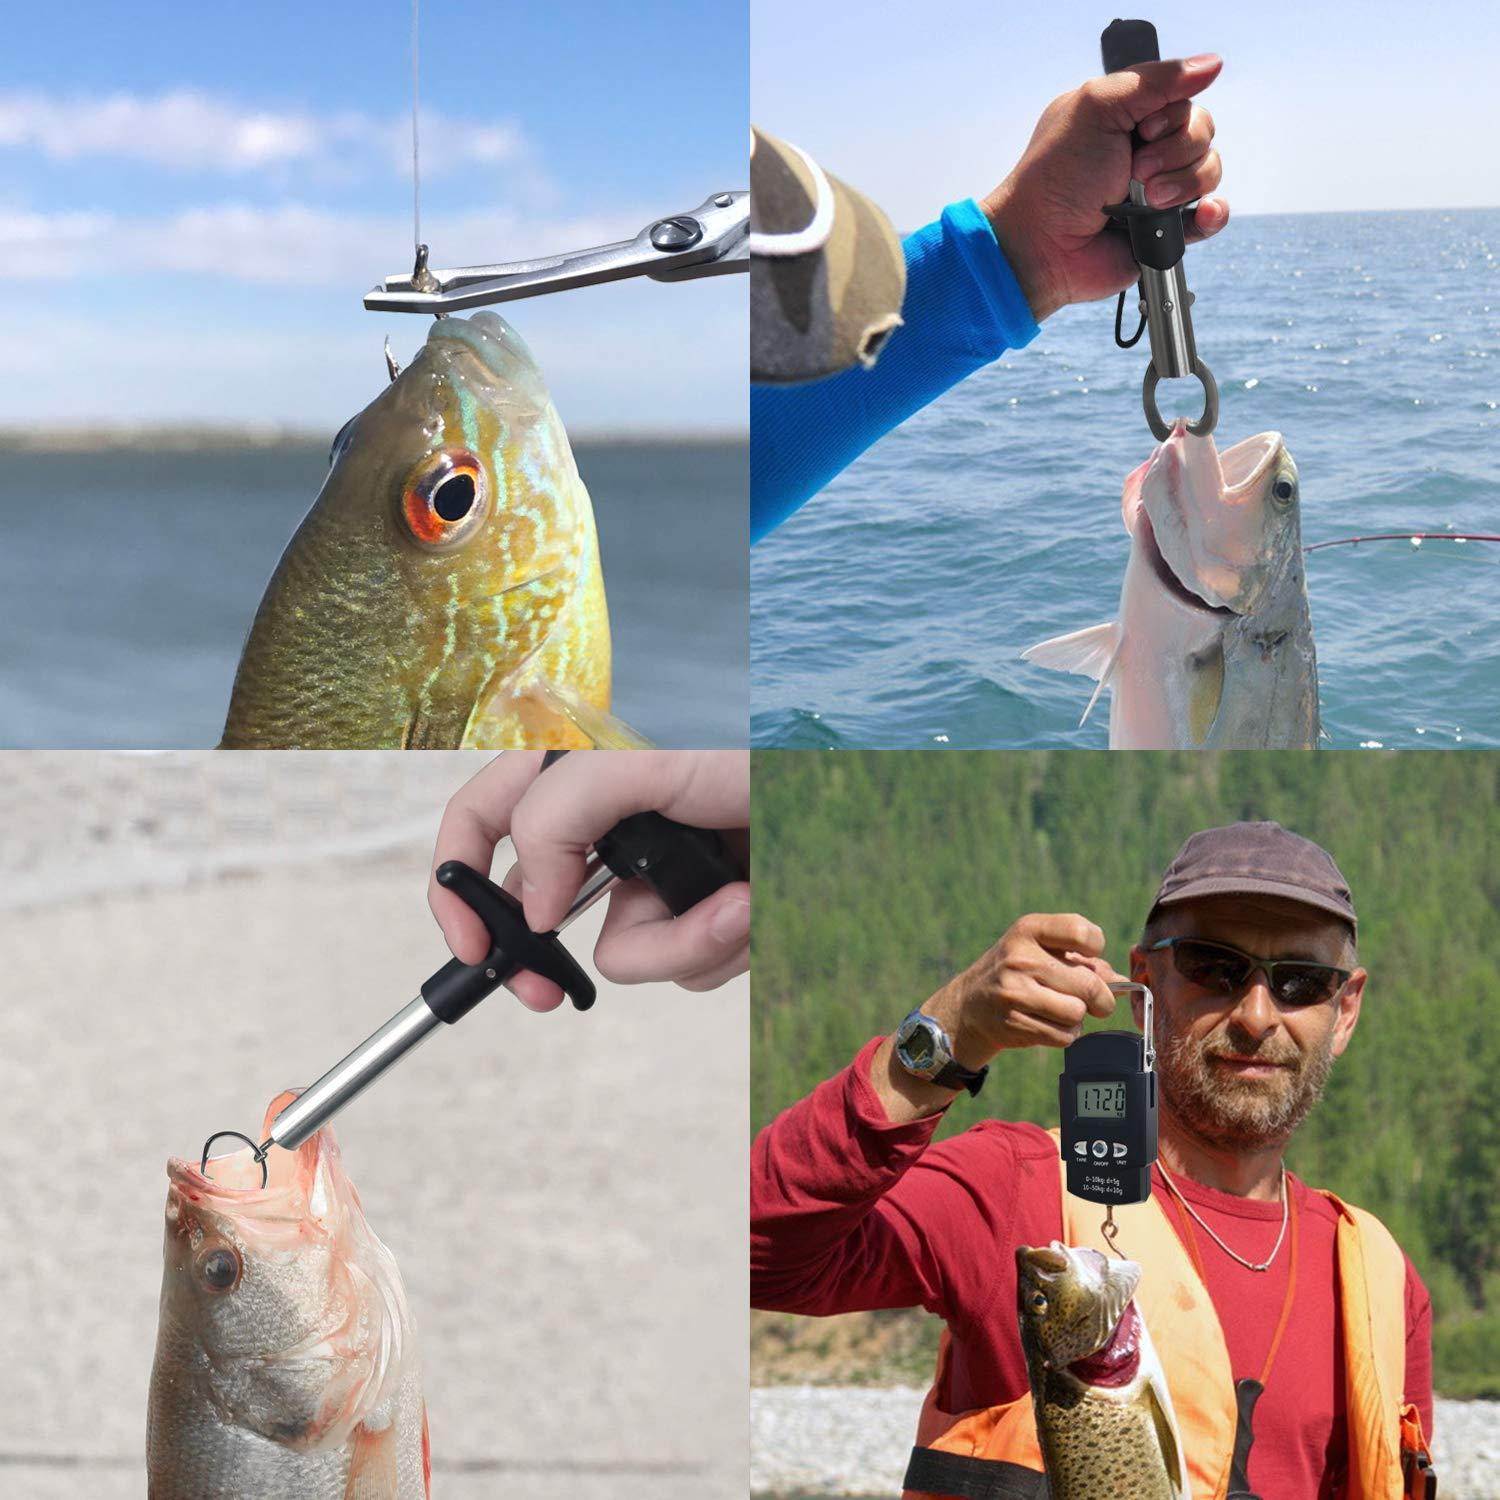 AIRKOUL 5pcs Fishing Tool Kit, Includes Fishing Pliers, Fish Hook